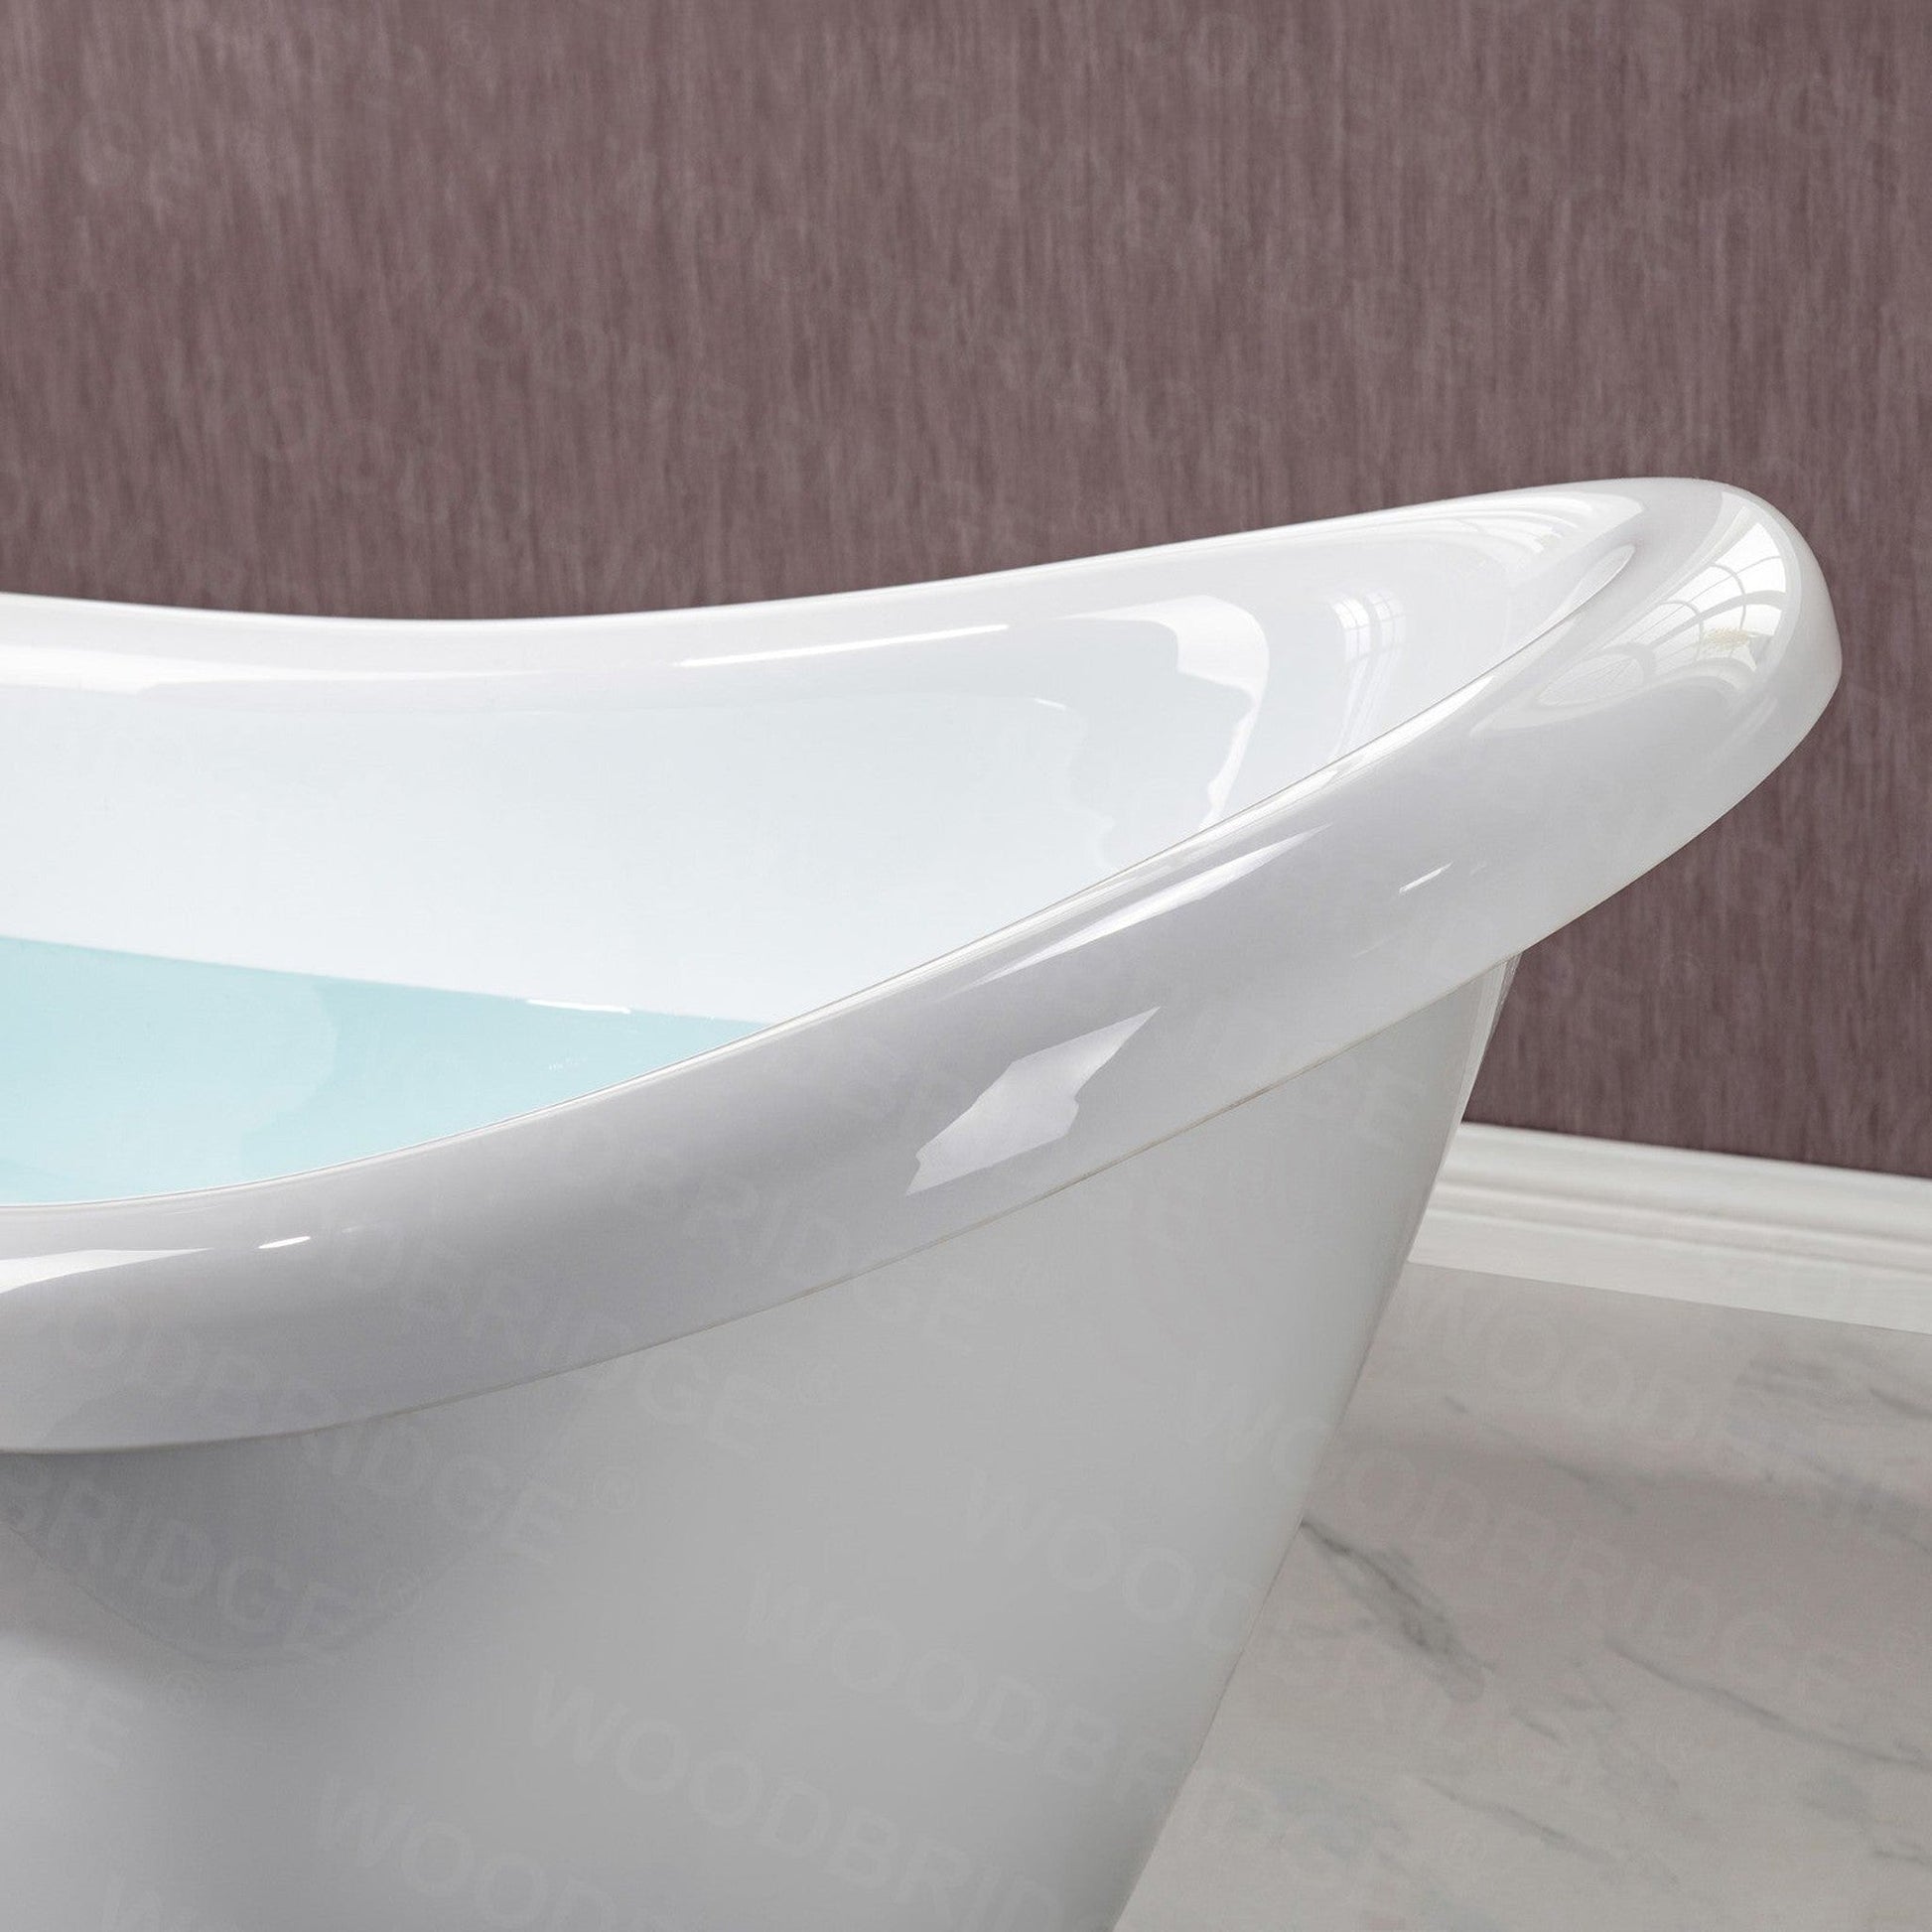 WoodBridge 54" White Acrylic Slipper Clawfoot Bath Tub With Matte Black Feet, Drain, Overflow, F0072MBVT Tub Filler and Caddy Tray